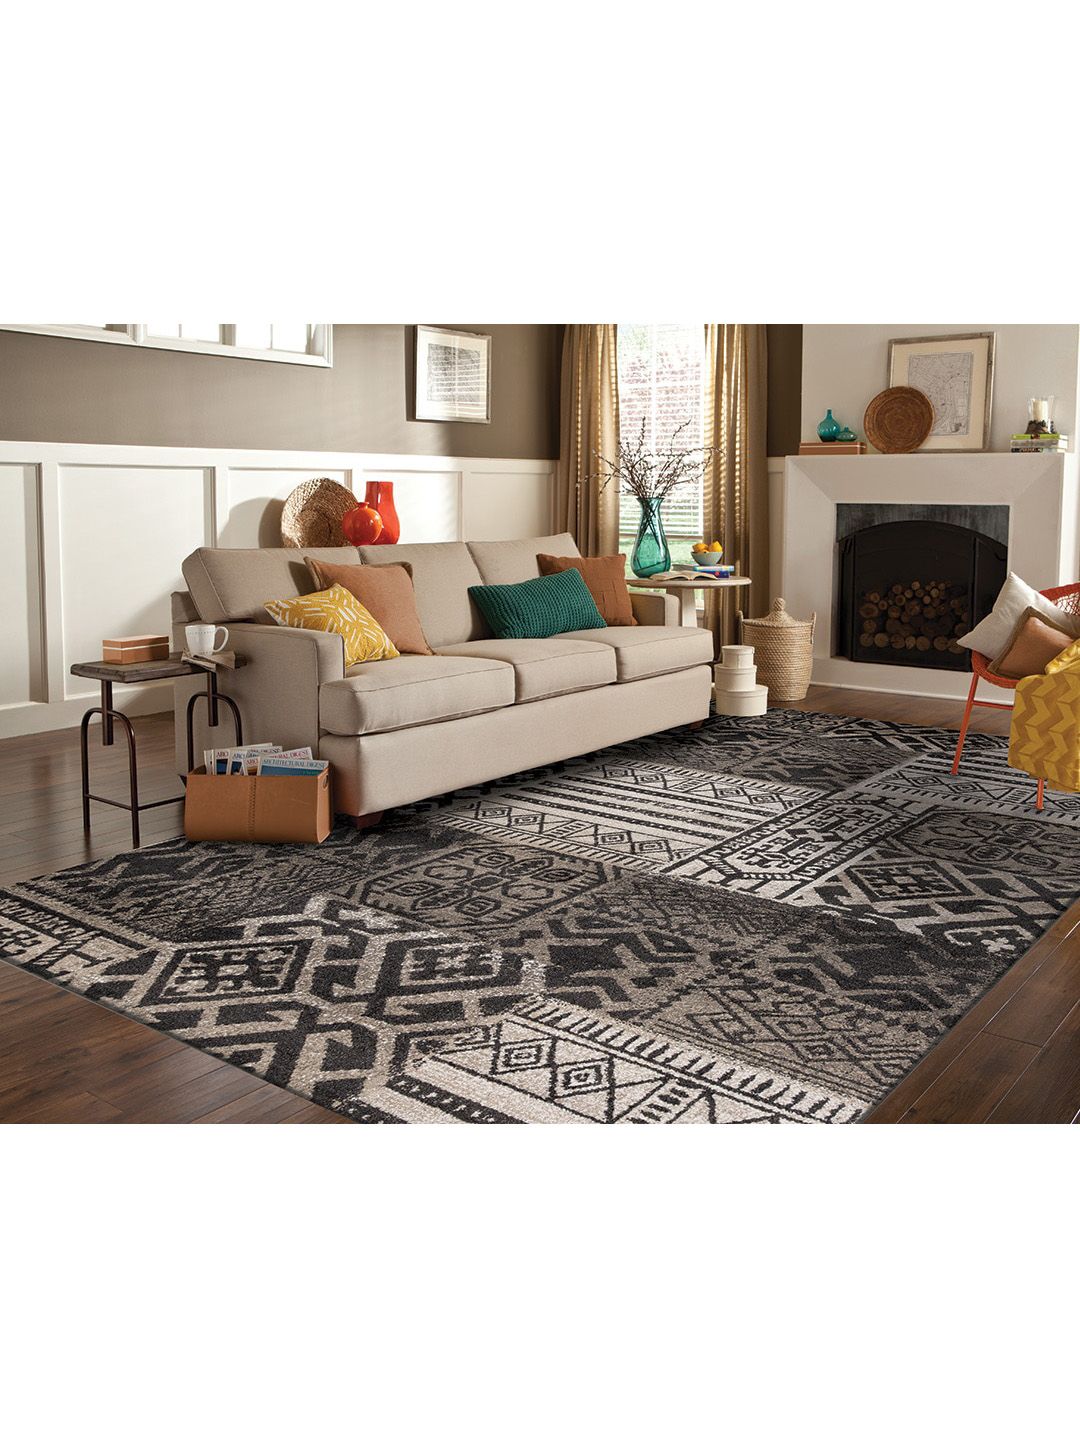 DDecor Black & White Geometric Medium Carpet Price in India